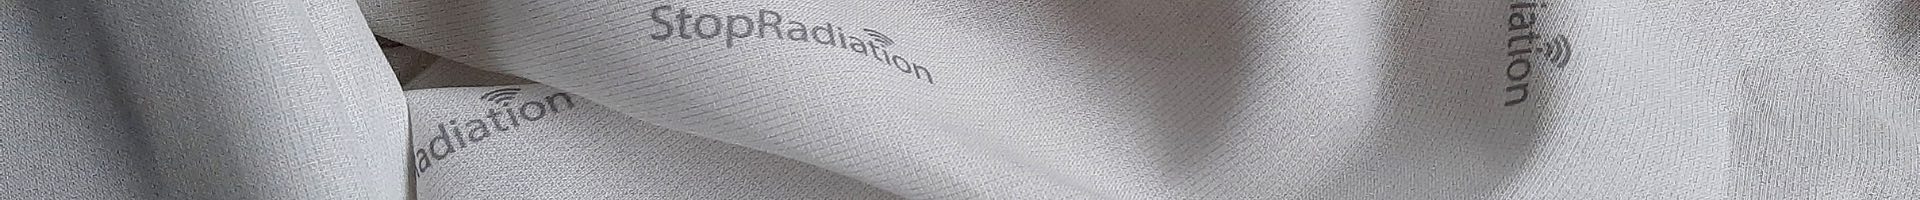 Papaba Anti Radiation Fabric,Anti Radiation Demagnetization Cloth Blocking RFID GPS Shielding Signal Fabric, Size: 300x145cm, Silver